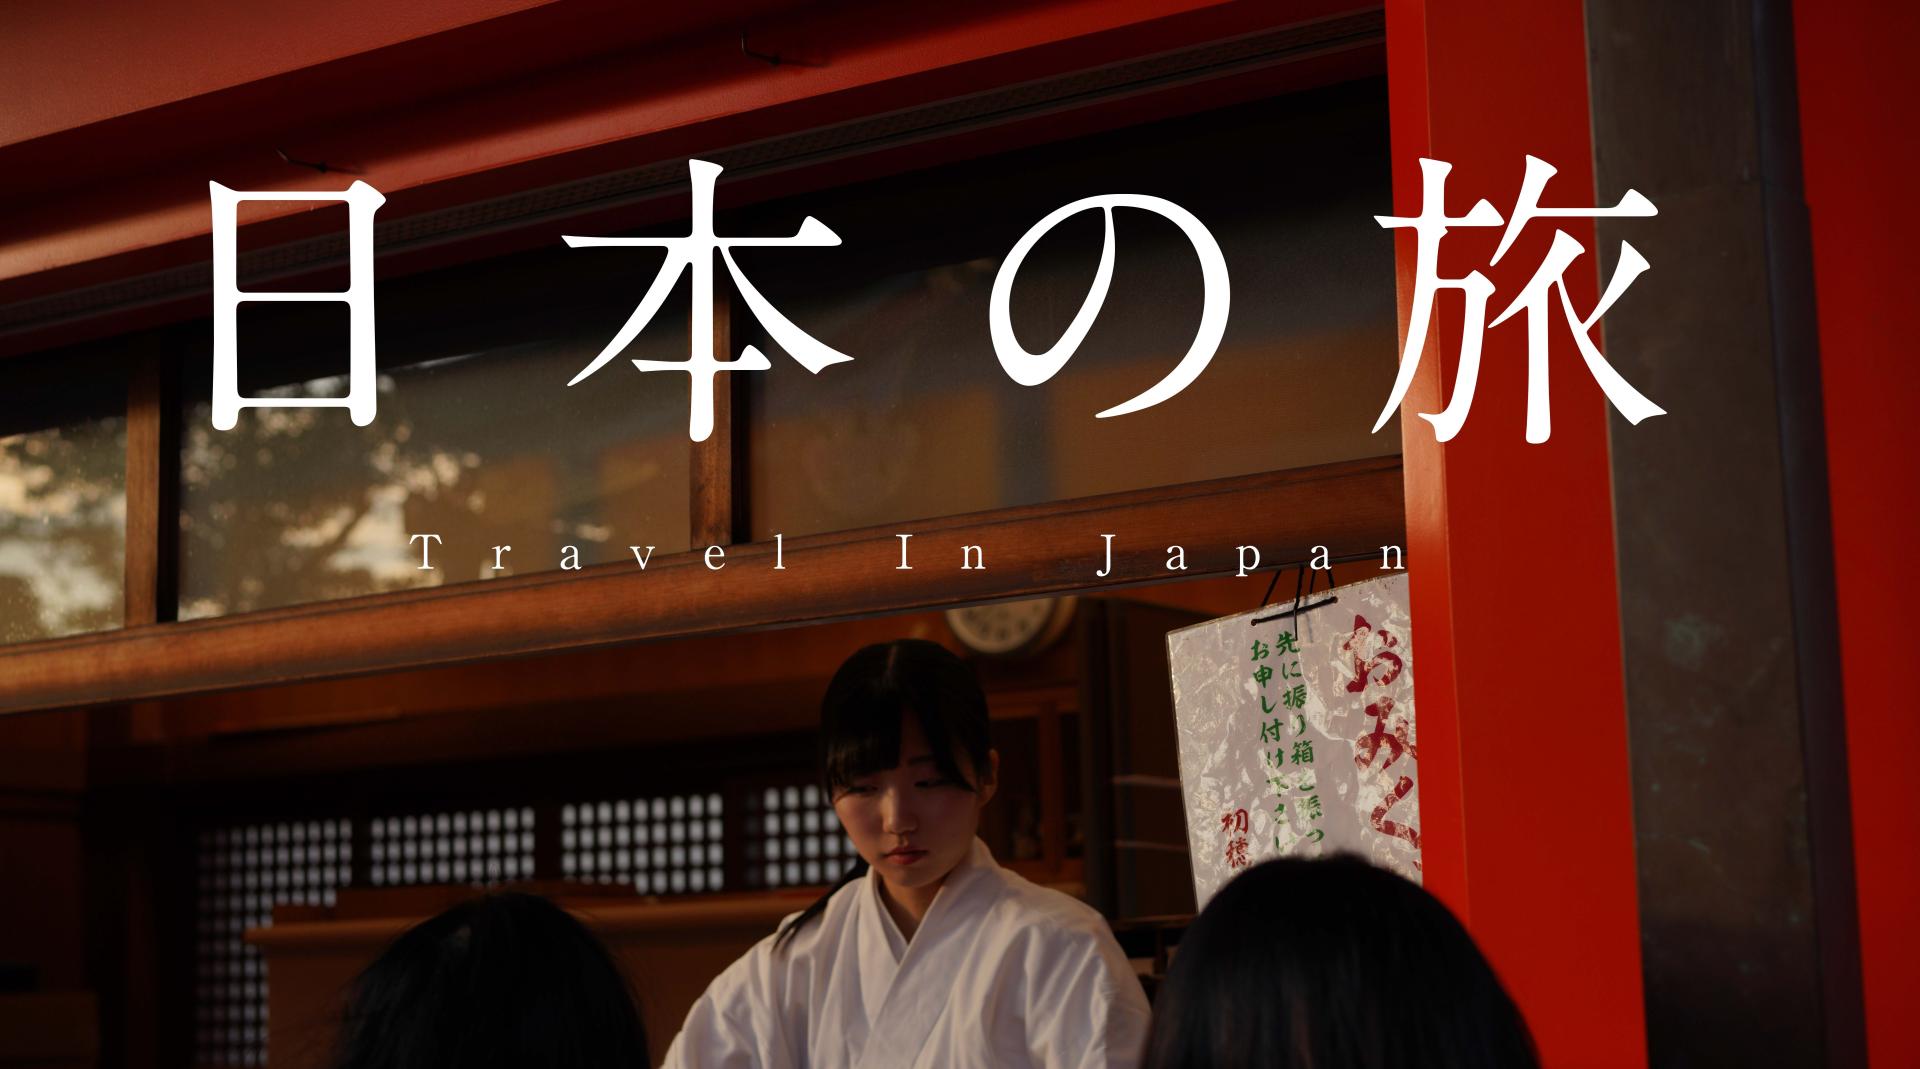 【旅行视频】日本の旅 Travel In Japan 东京 京都 大阪 静冈